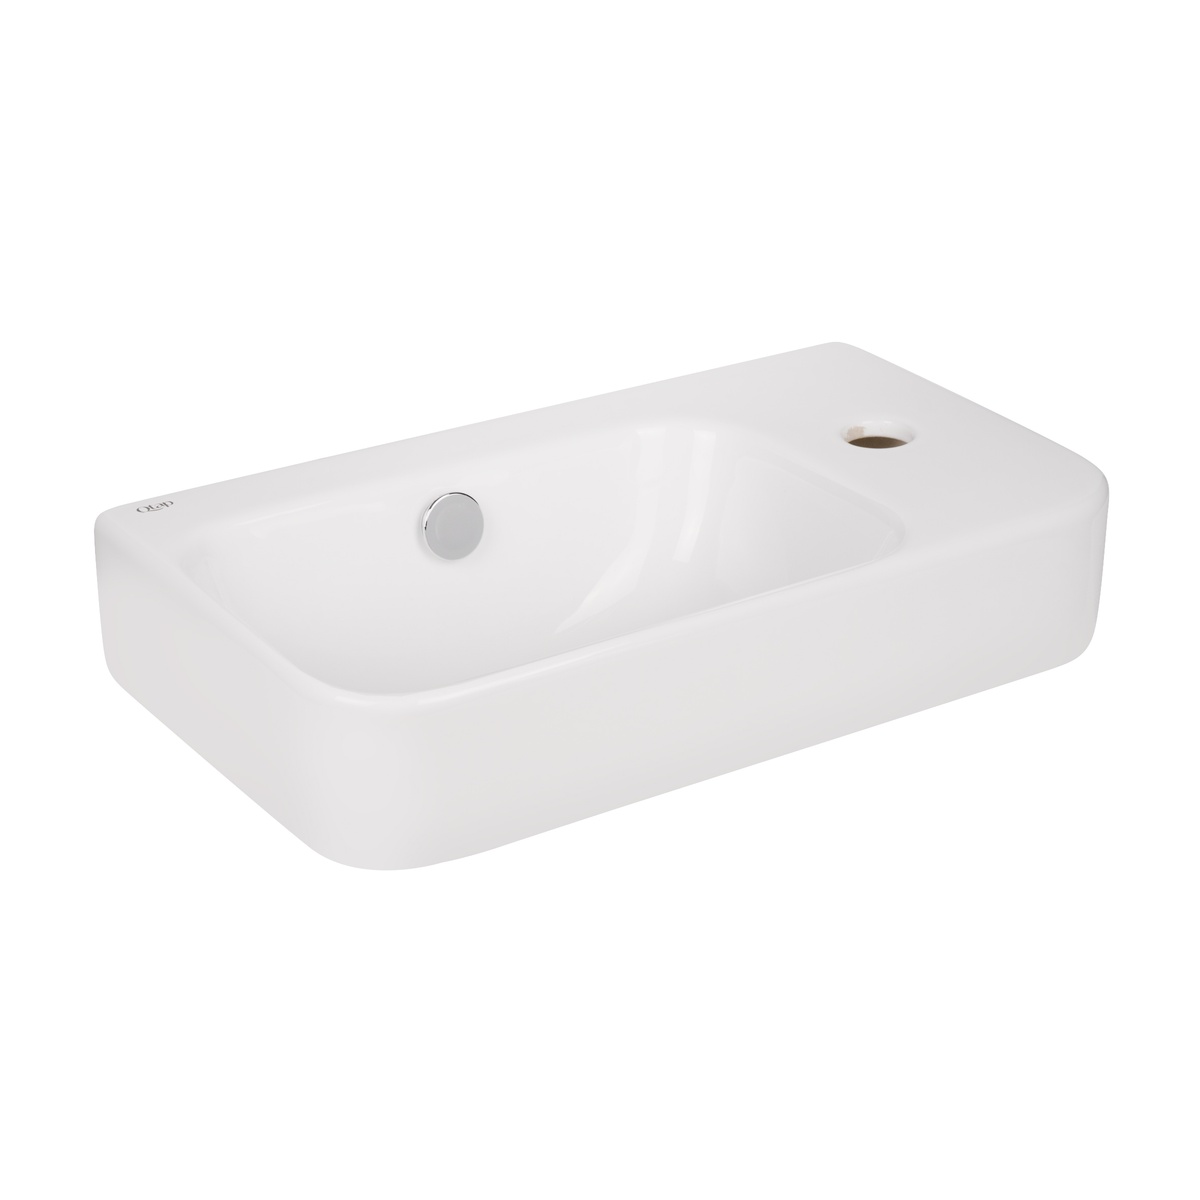 Раковина подвесная в ванную 450мм x 260мм Q-TAP Tern белый прямоугольная QT17115117RW